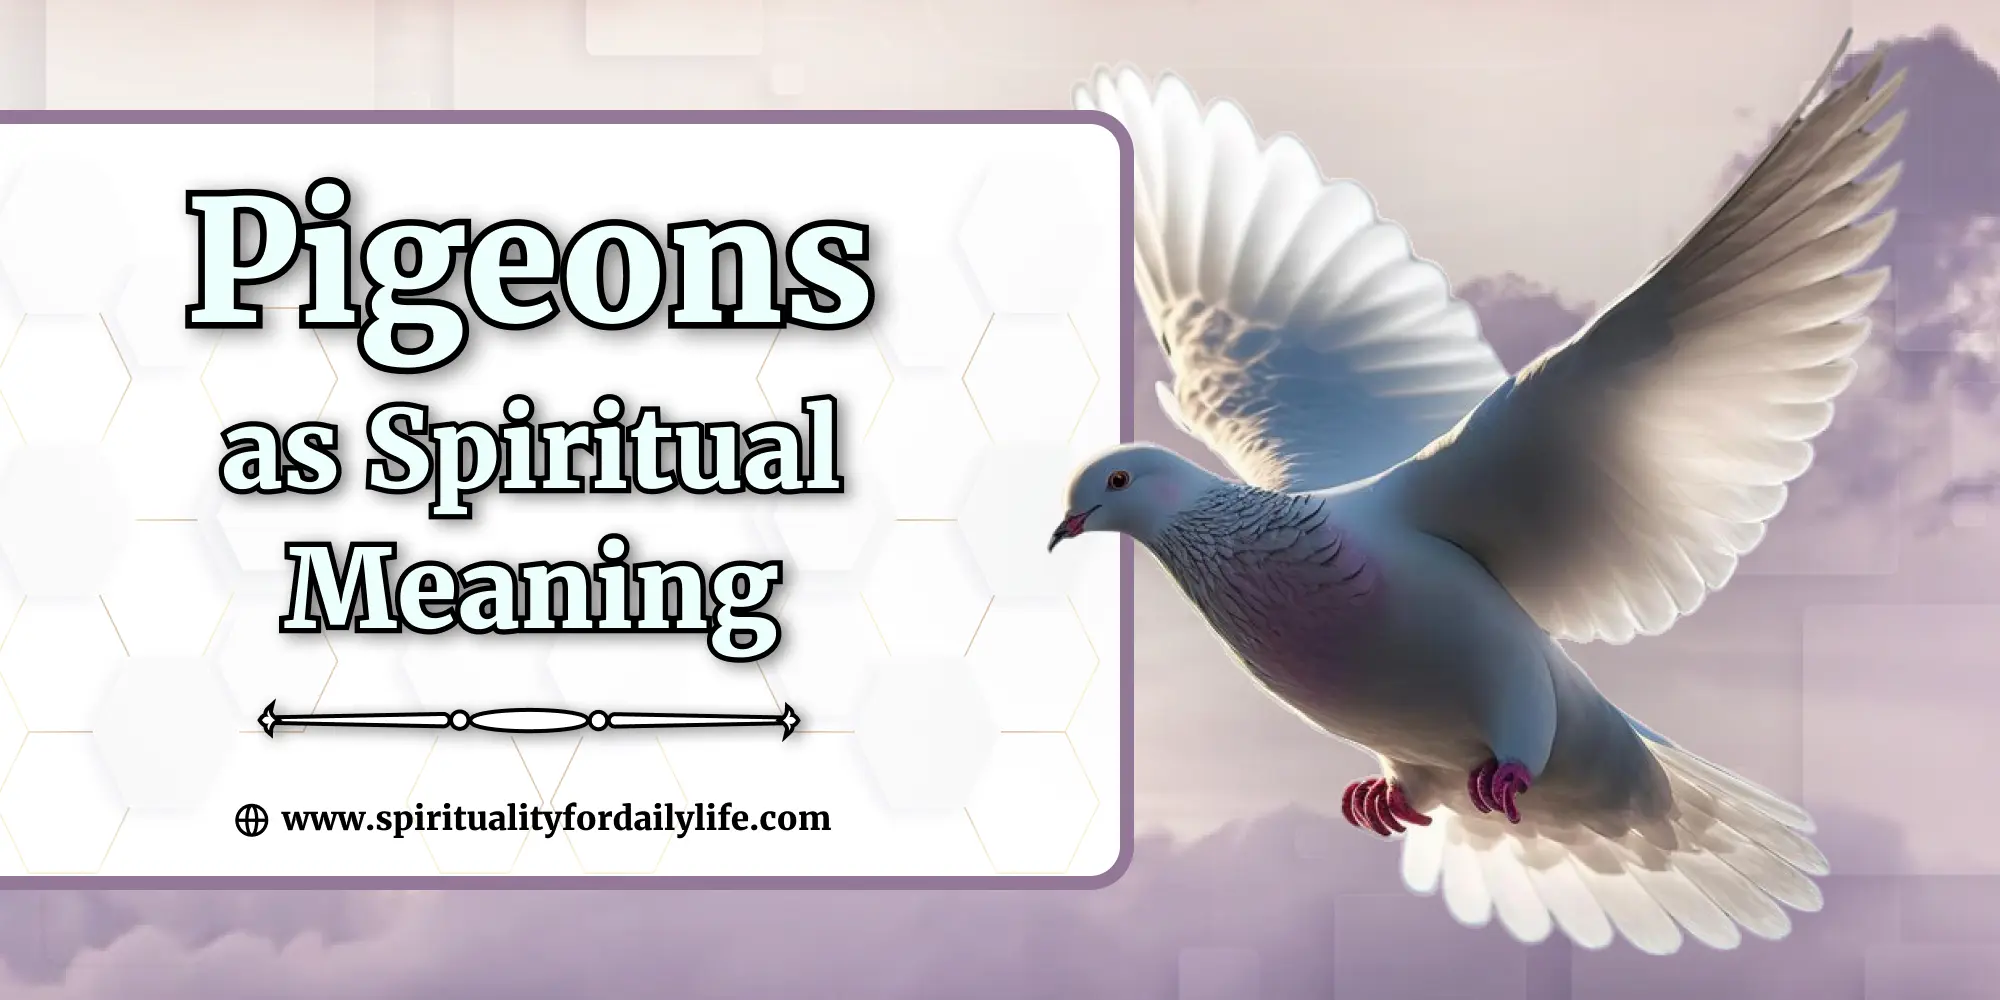 pigeons as spiritual meaning